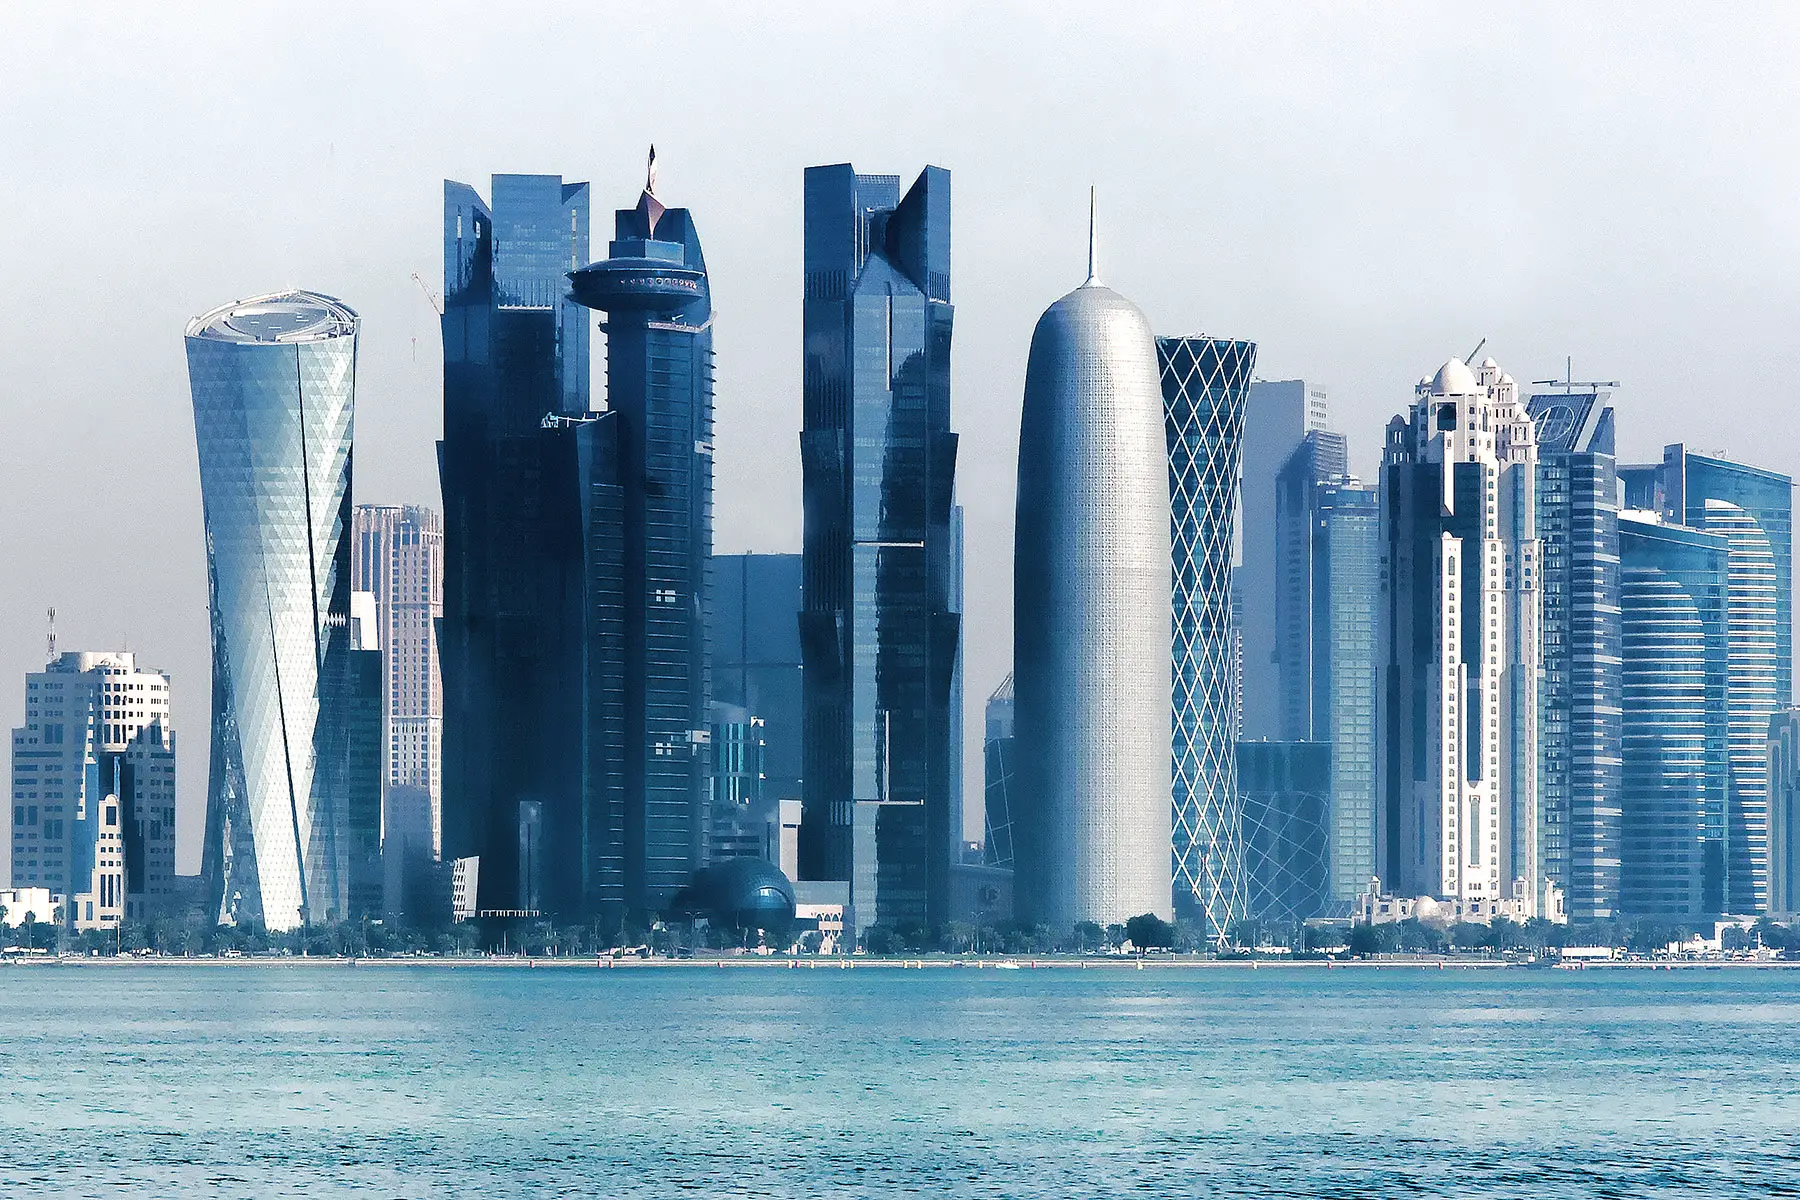 Qatar Financial Center